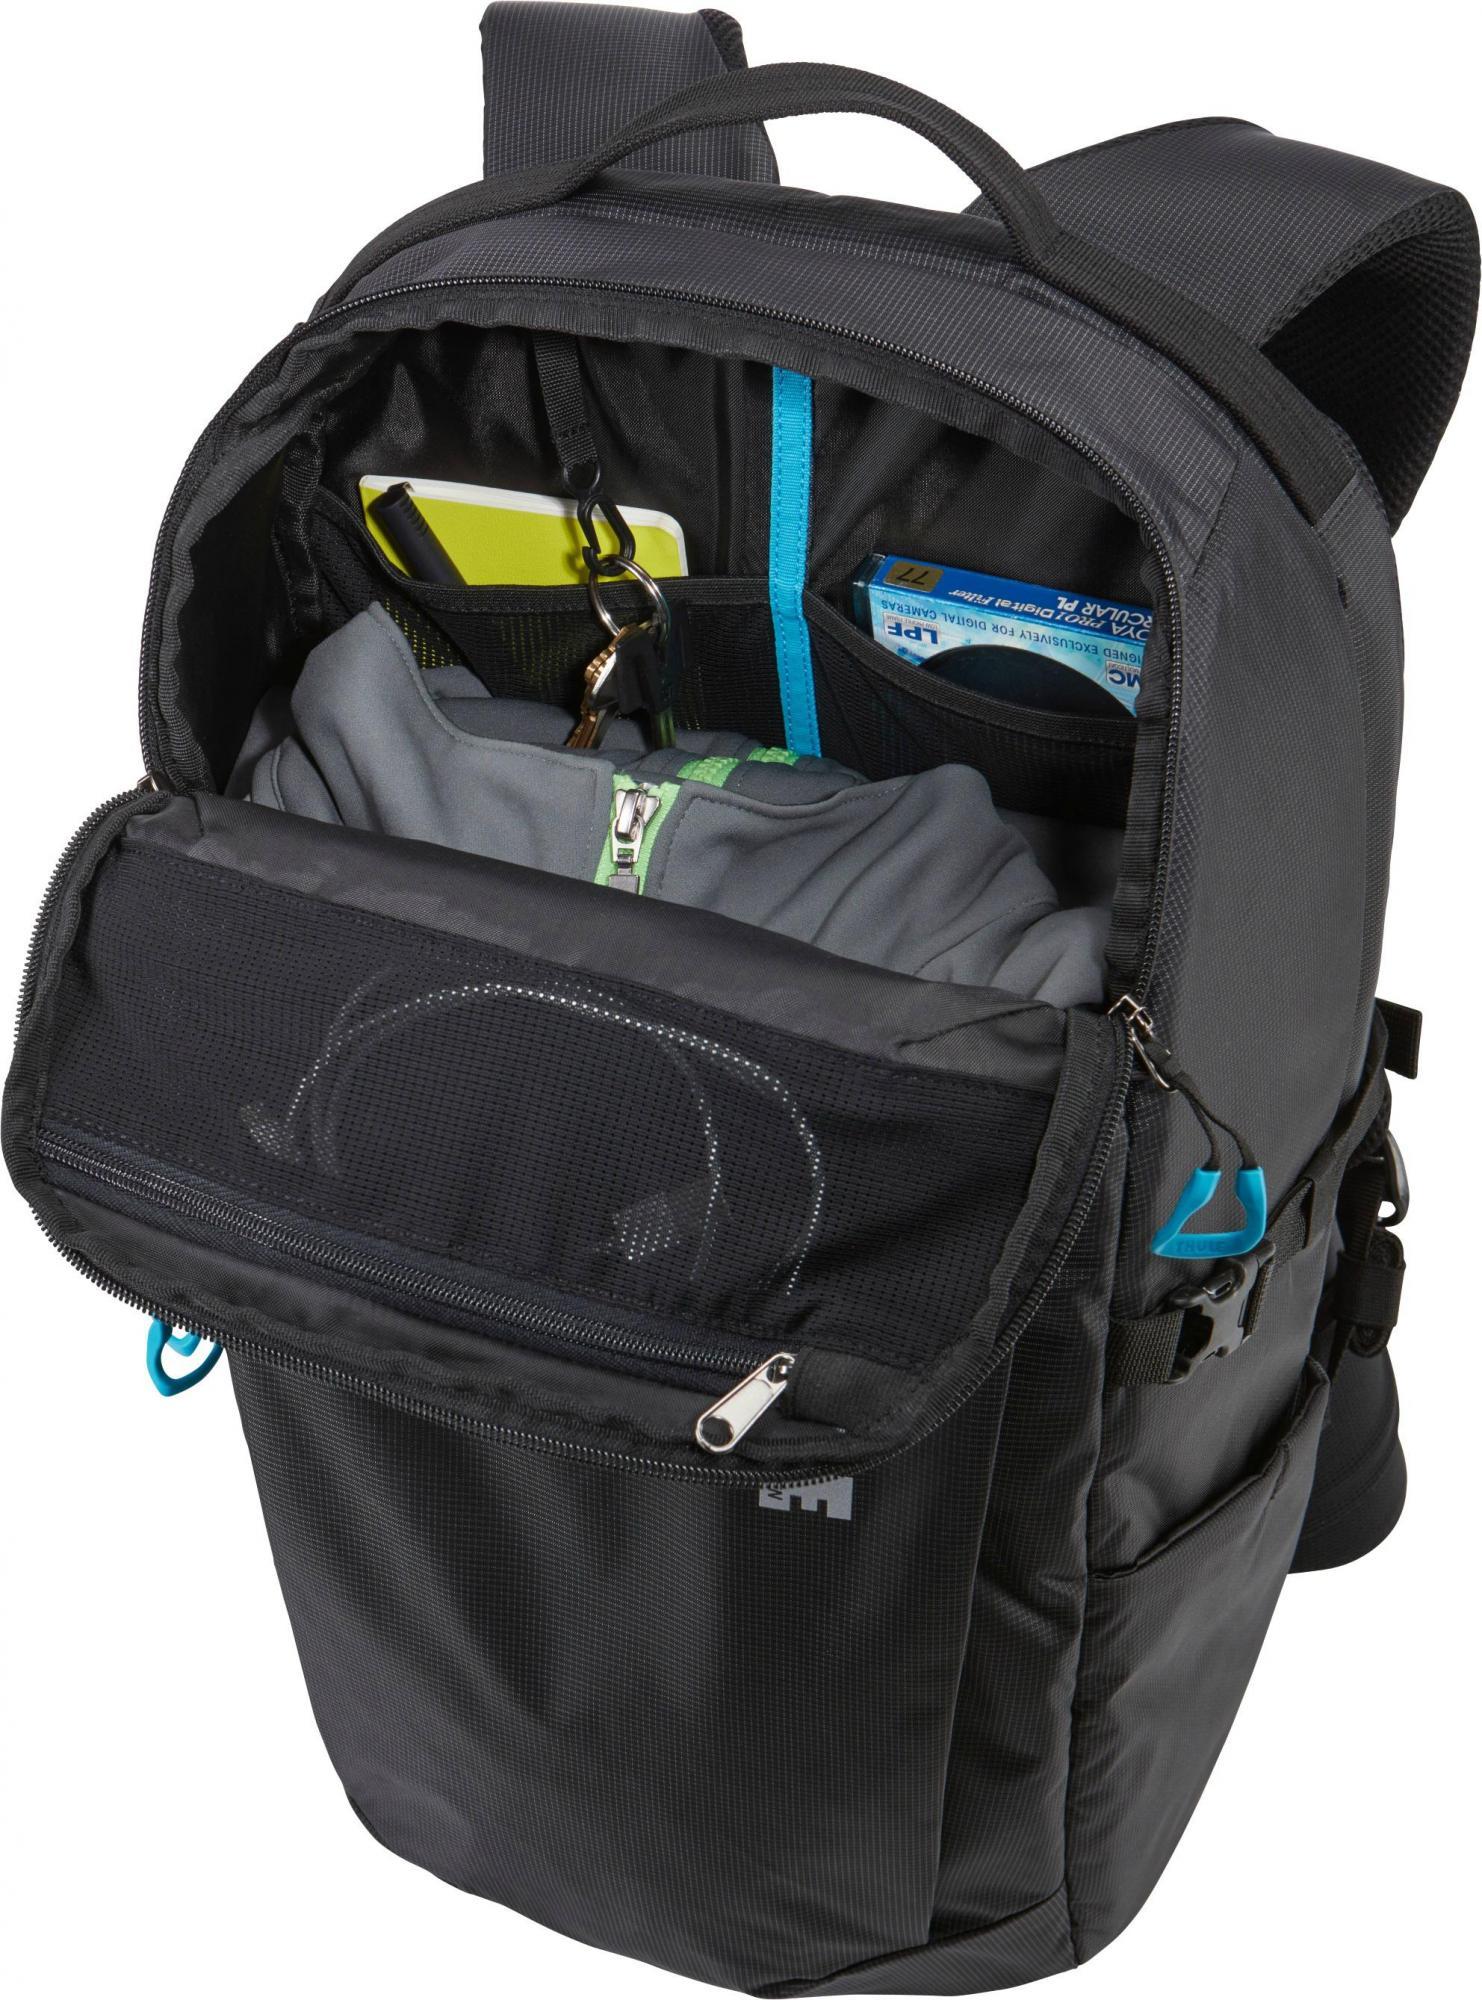 Thule Luggage Aspect DSLR Backpack – Luggage Pros